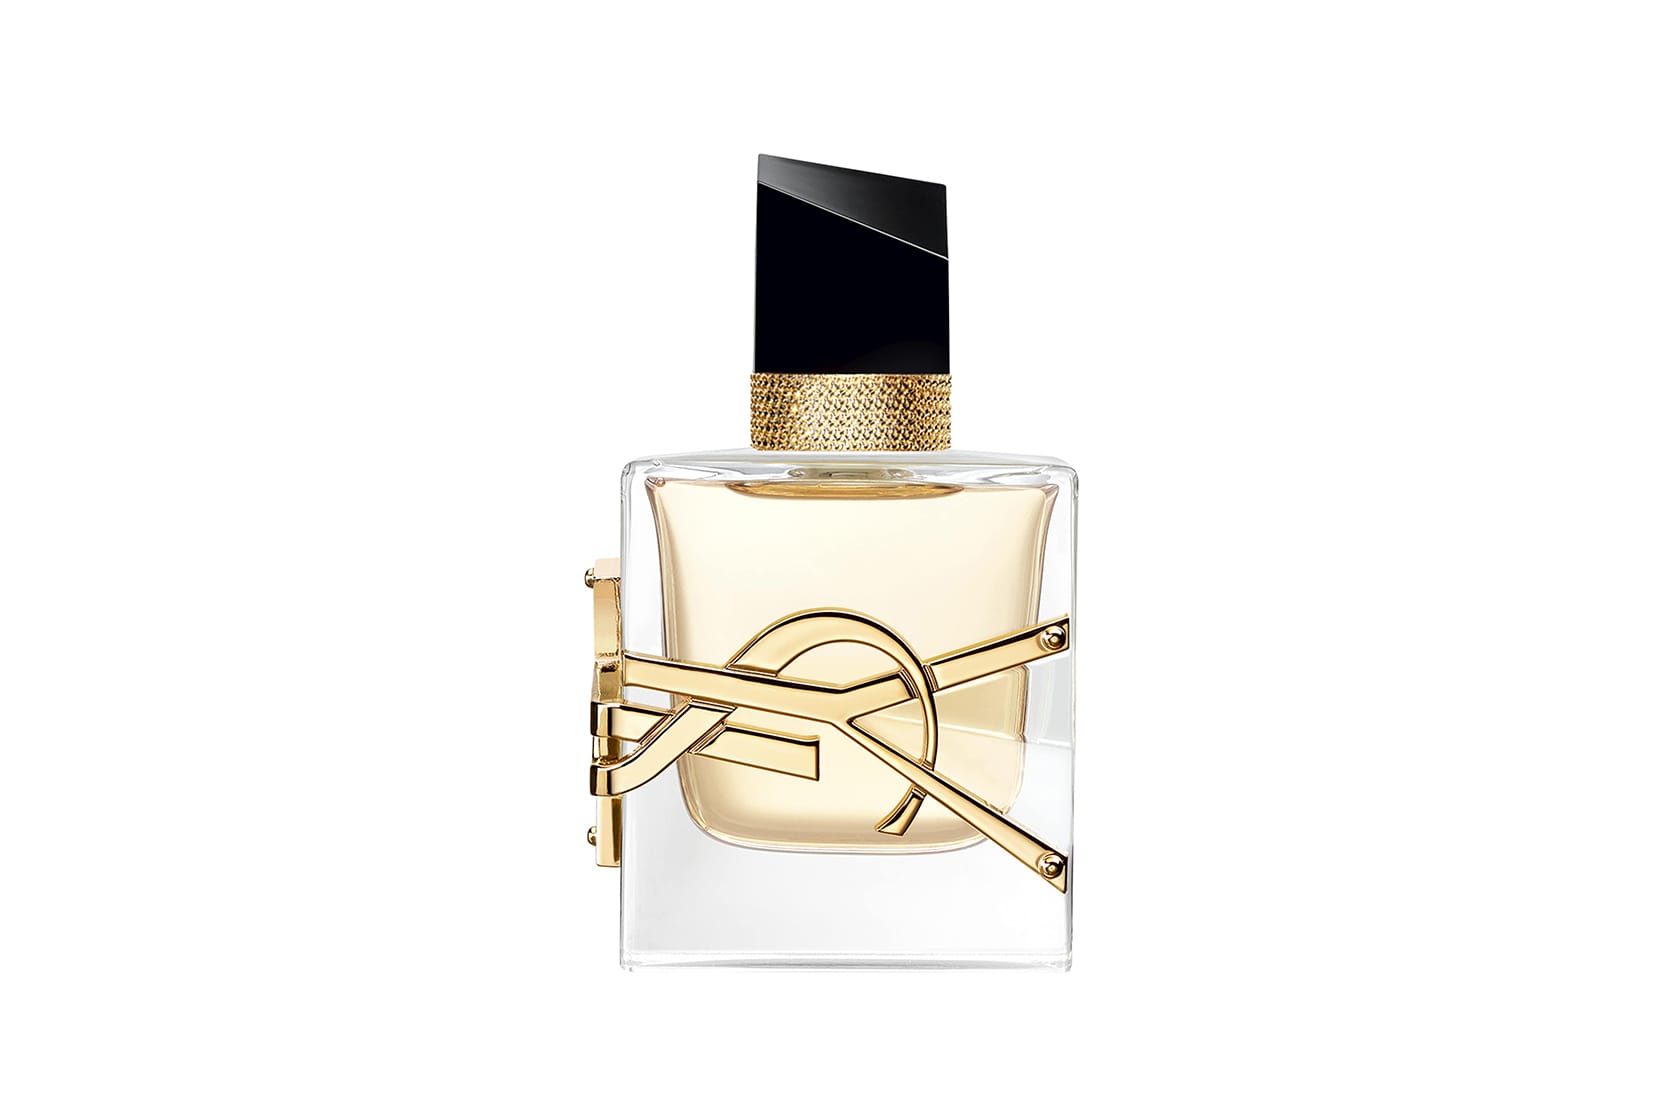 ysl perfume gold bottle